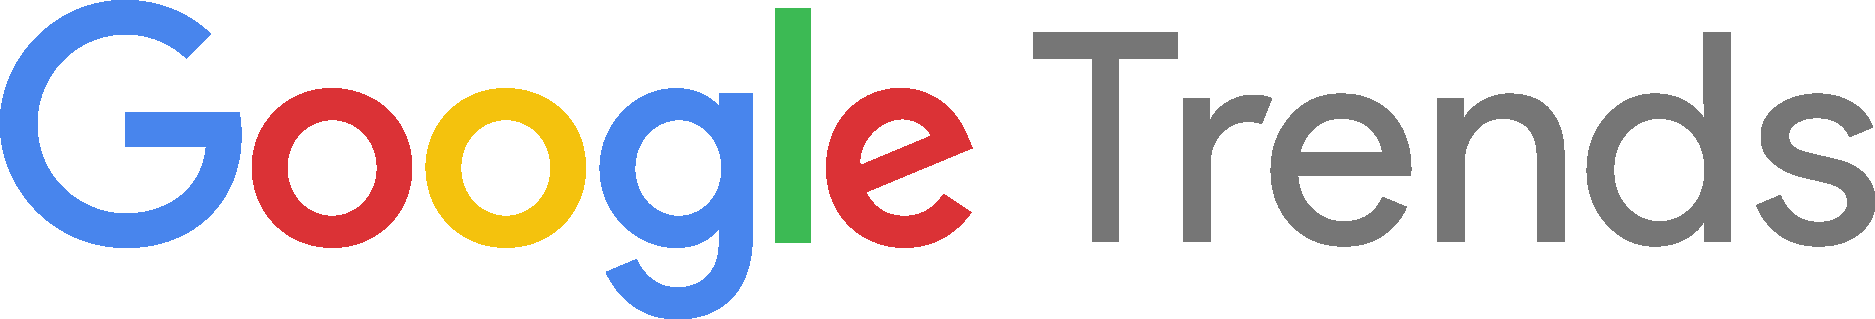 Google-Trends-Logo